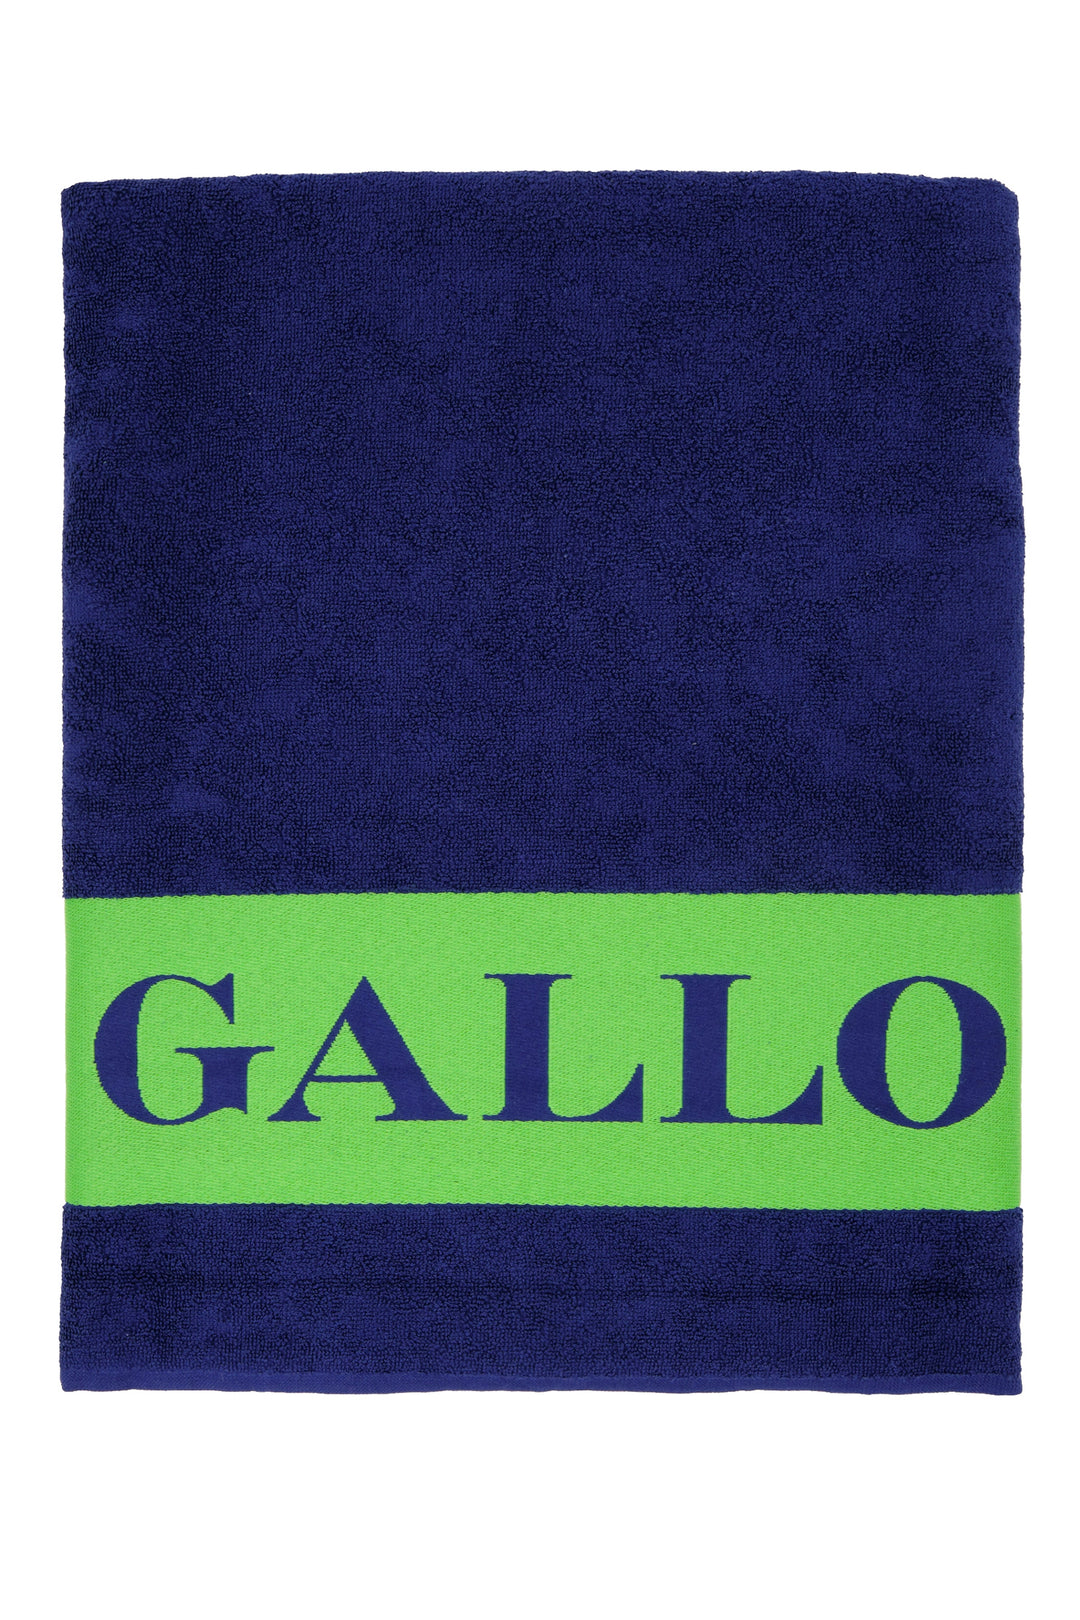 GALLO Telo mare unisex cotone blu royal tinta unita con logo gallo - Mancinelli 1954